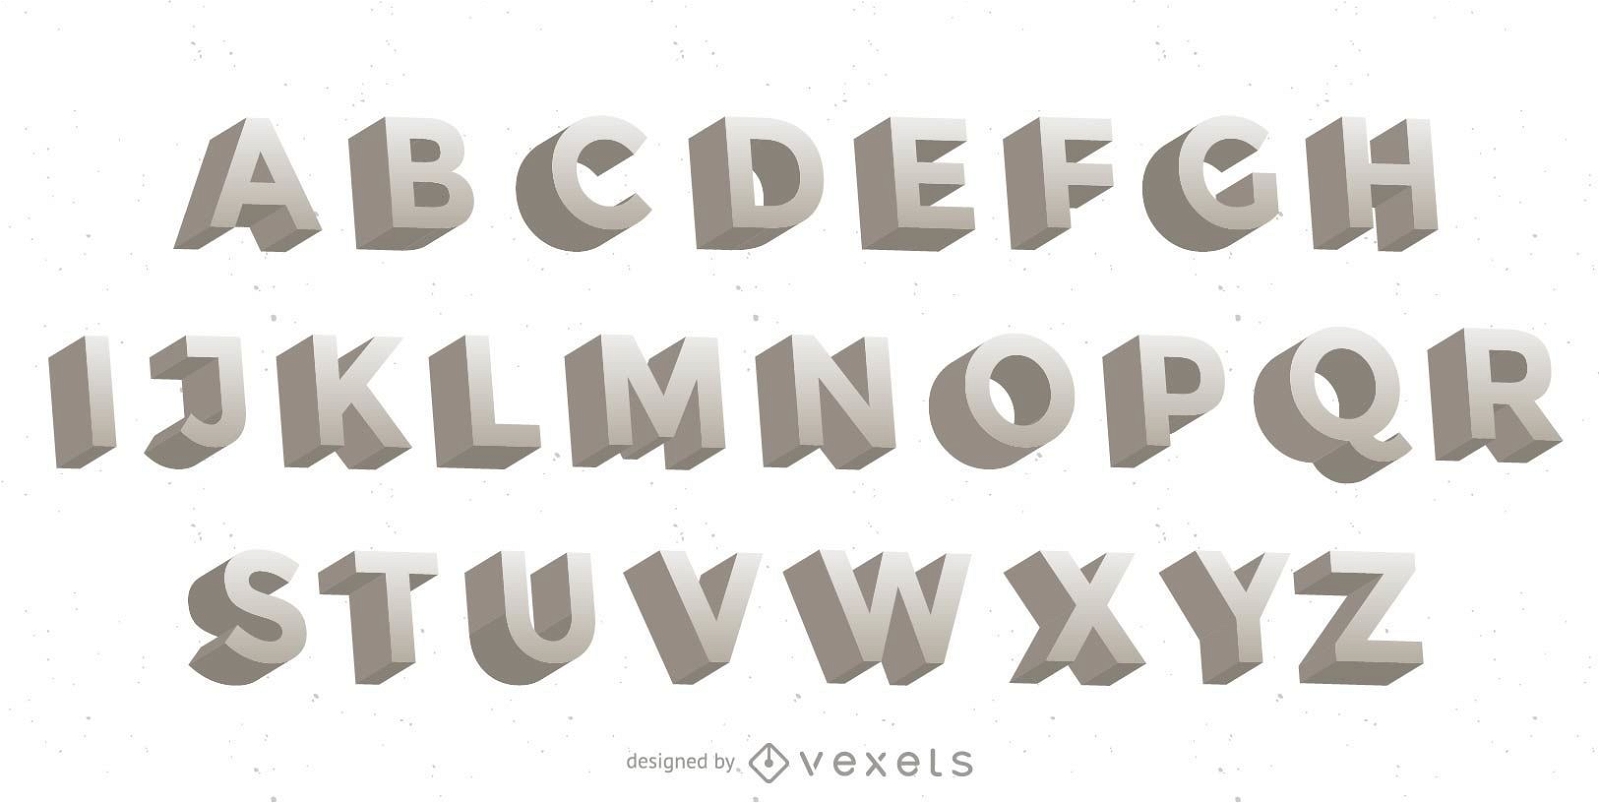 3D Vector Letters